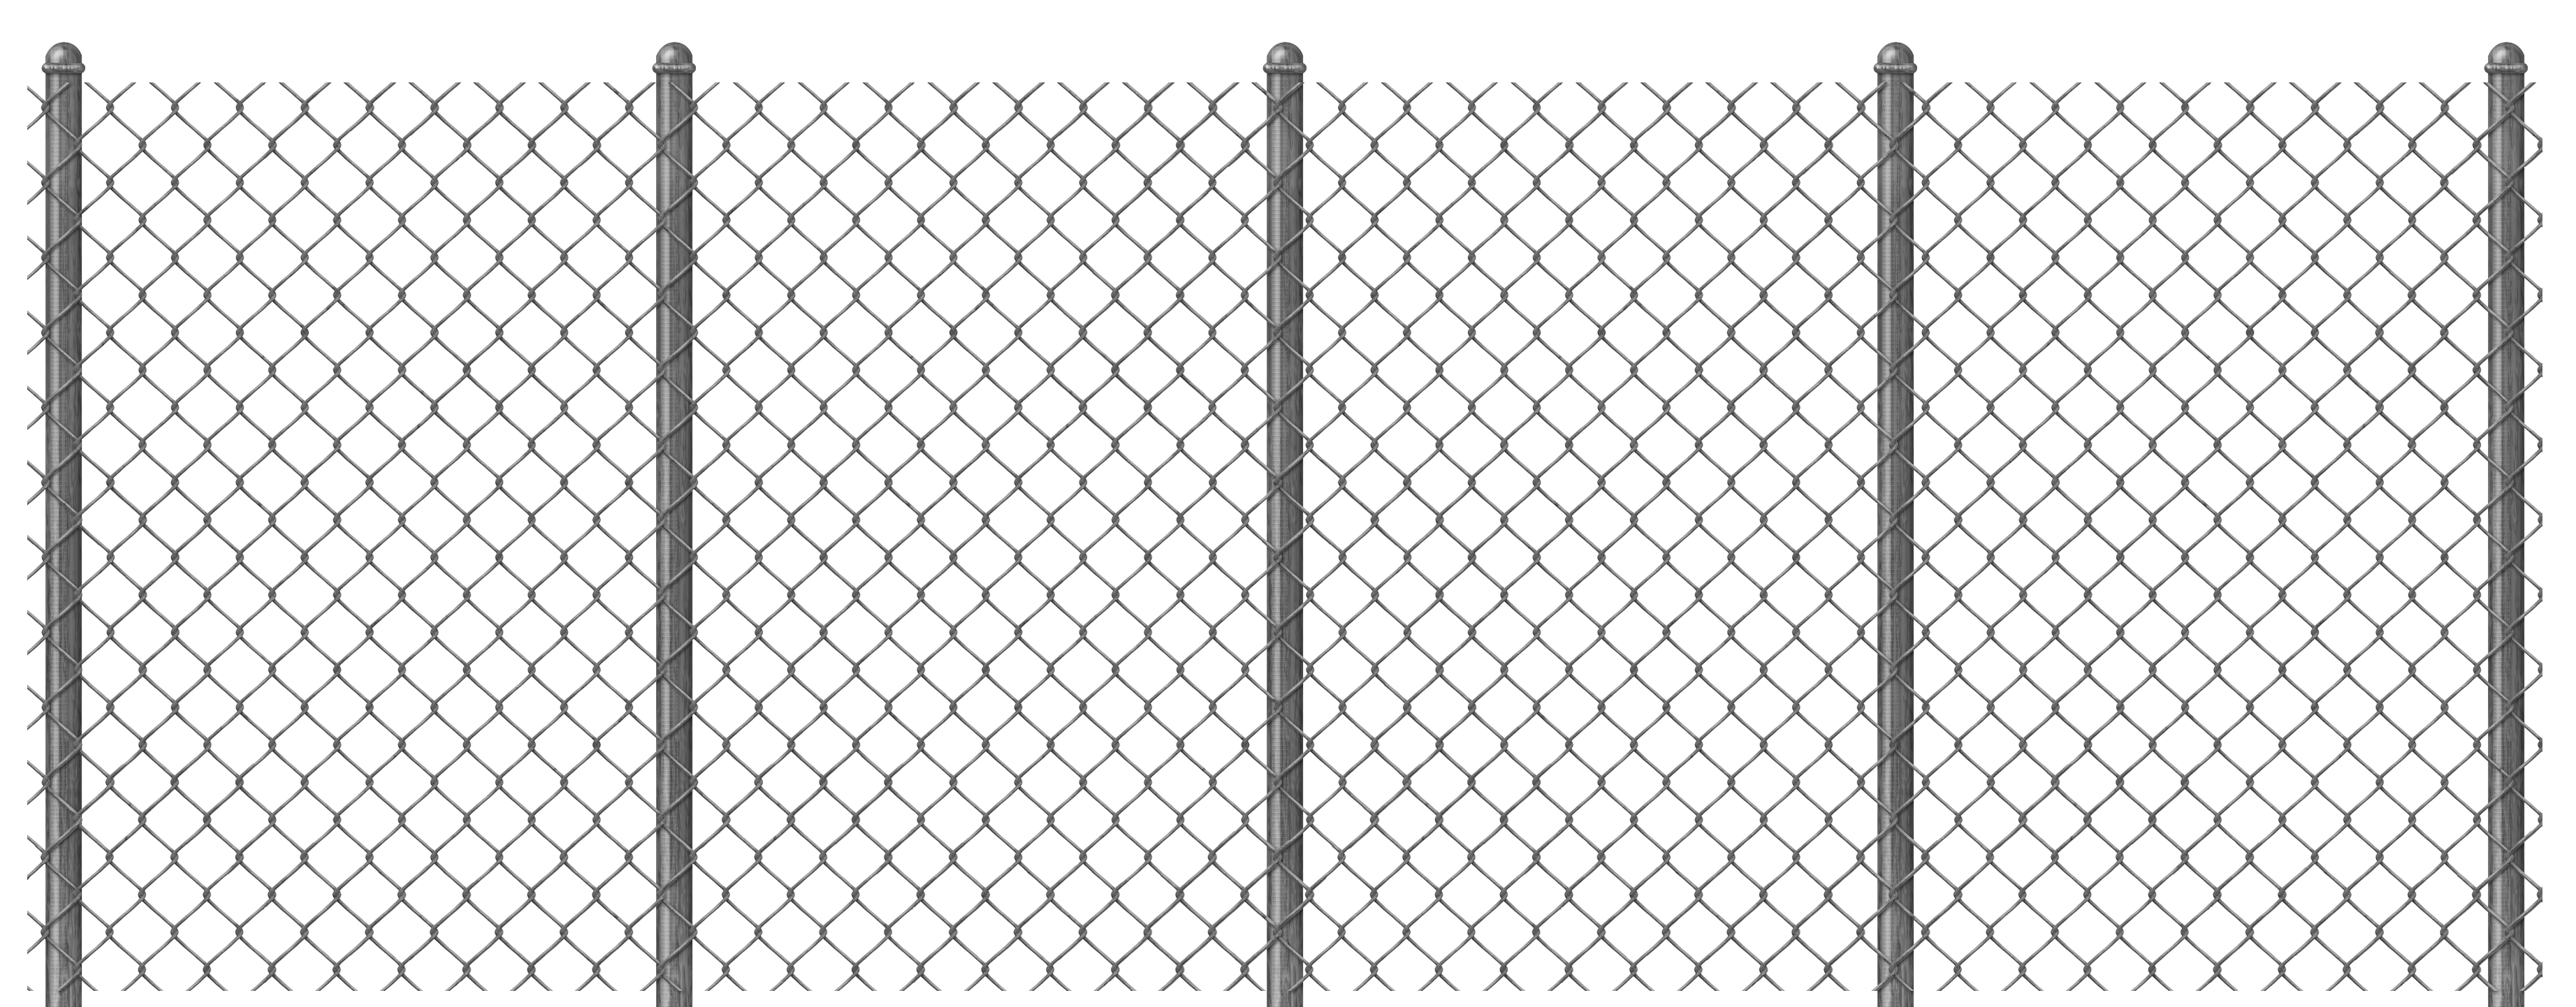 Fence #14